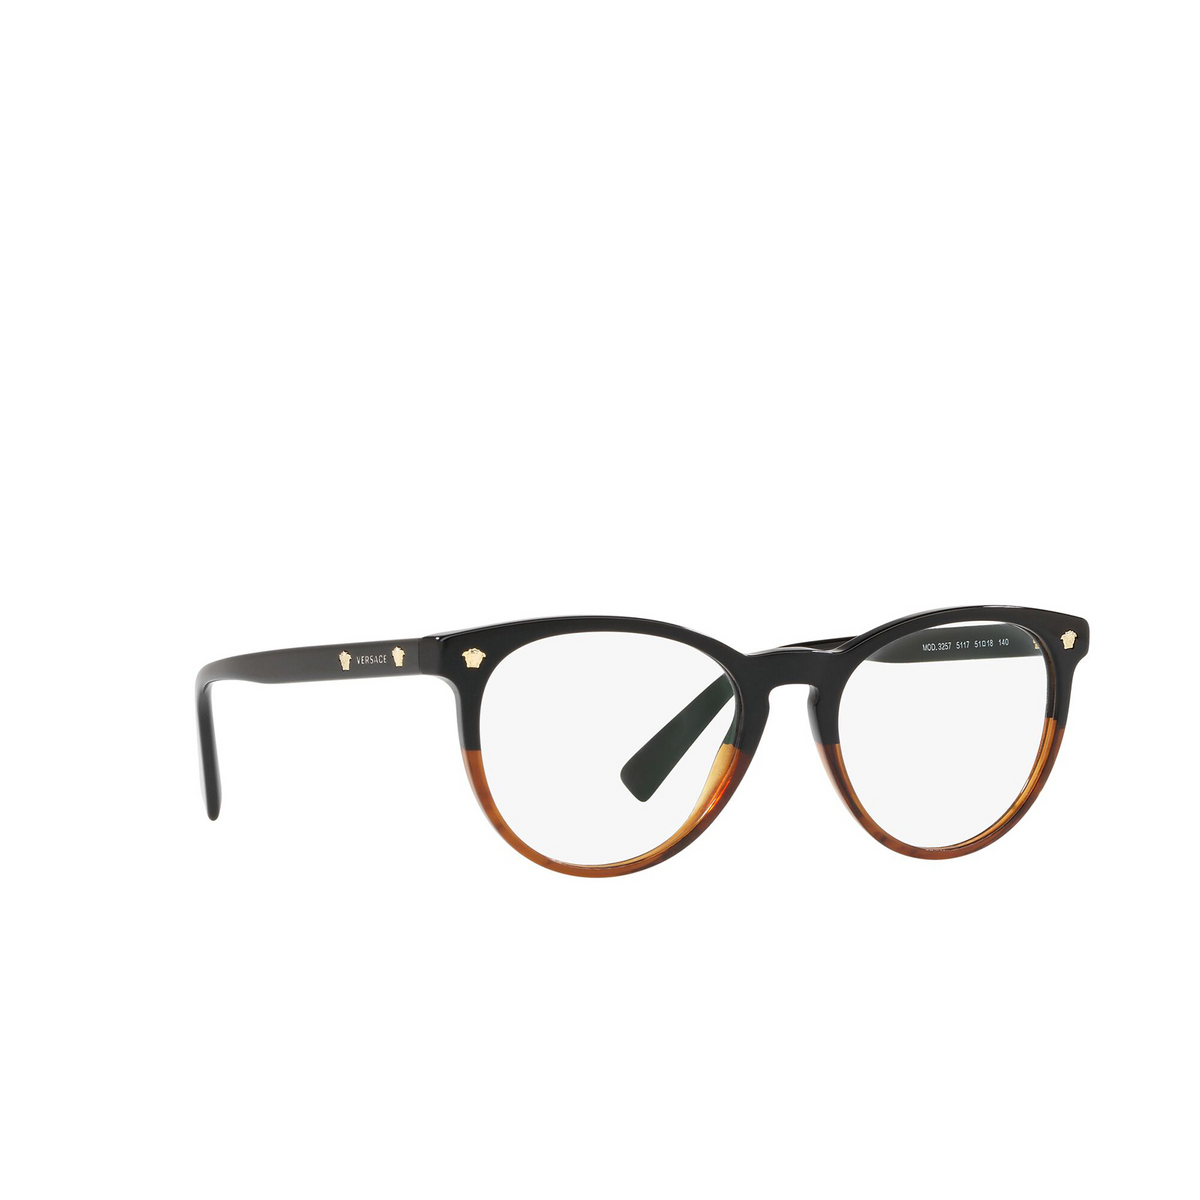 Versace® Round Eyeglasses: VE3257 color Black / Havana 5117 - three-quarters view.